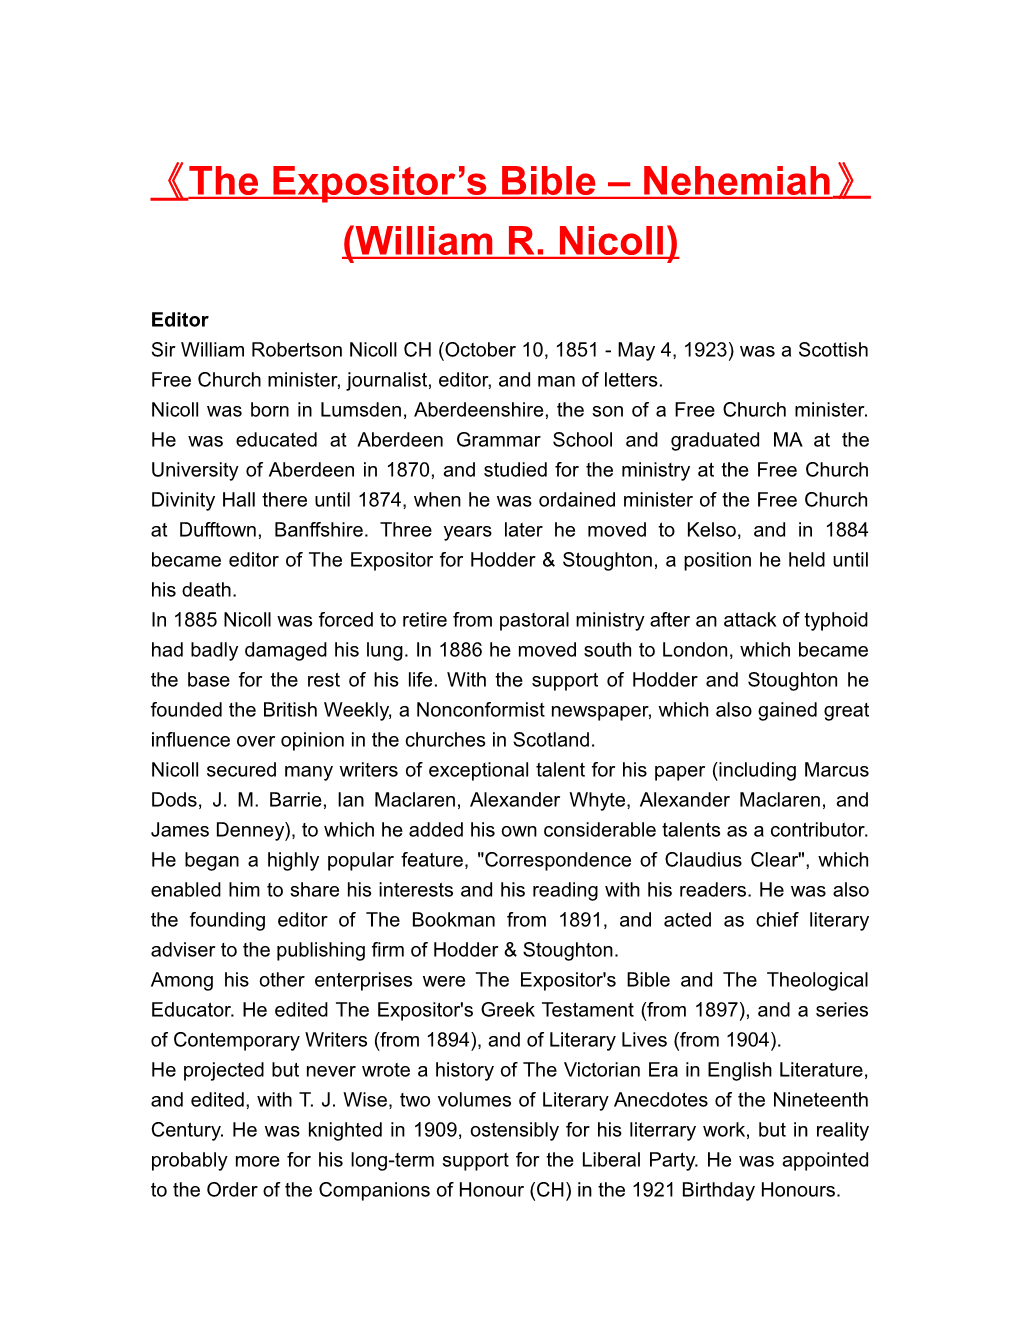 The Expositor S Bible Nehemiah (William R. Nicoll)